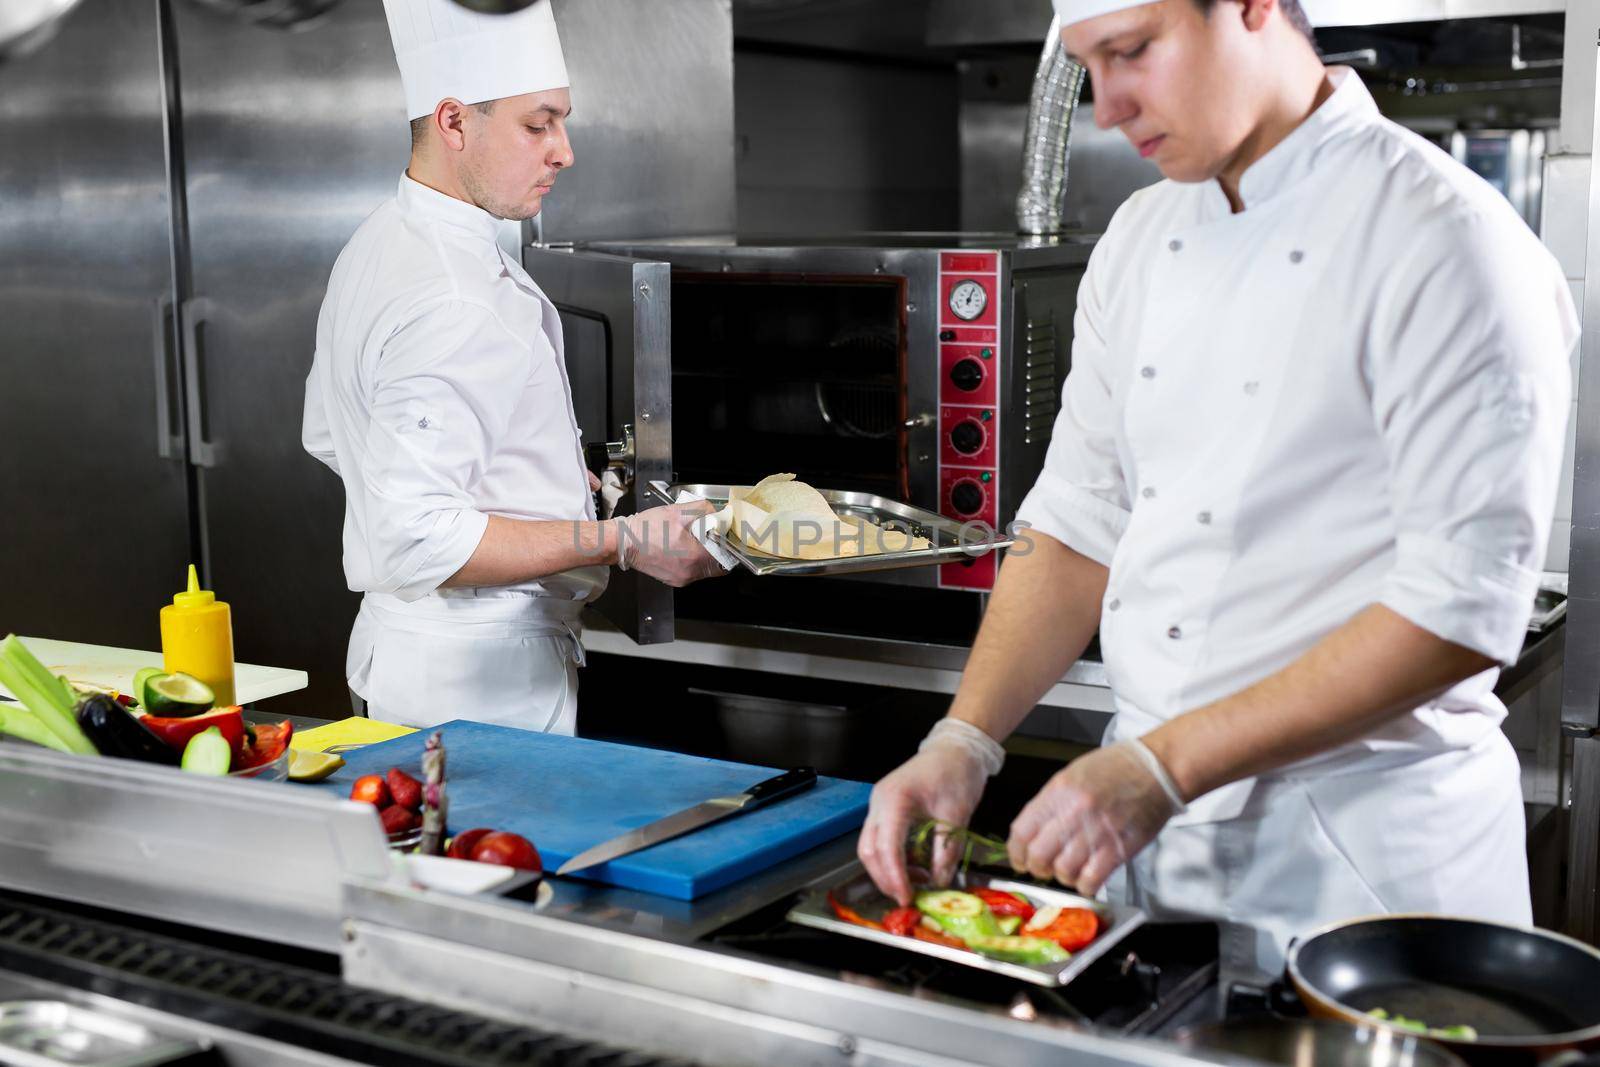 Chefs prepare delicious dishes in the kitchen by StudioPeace